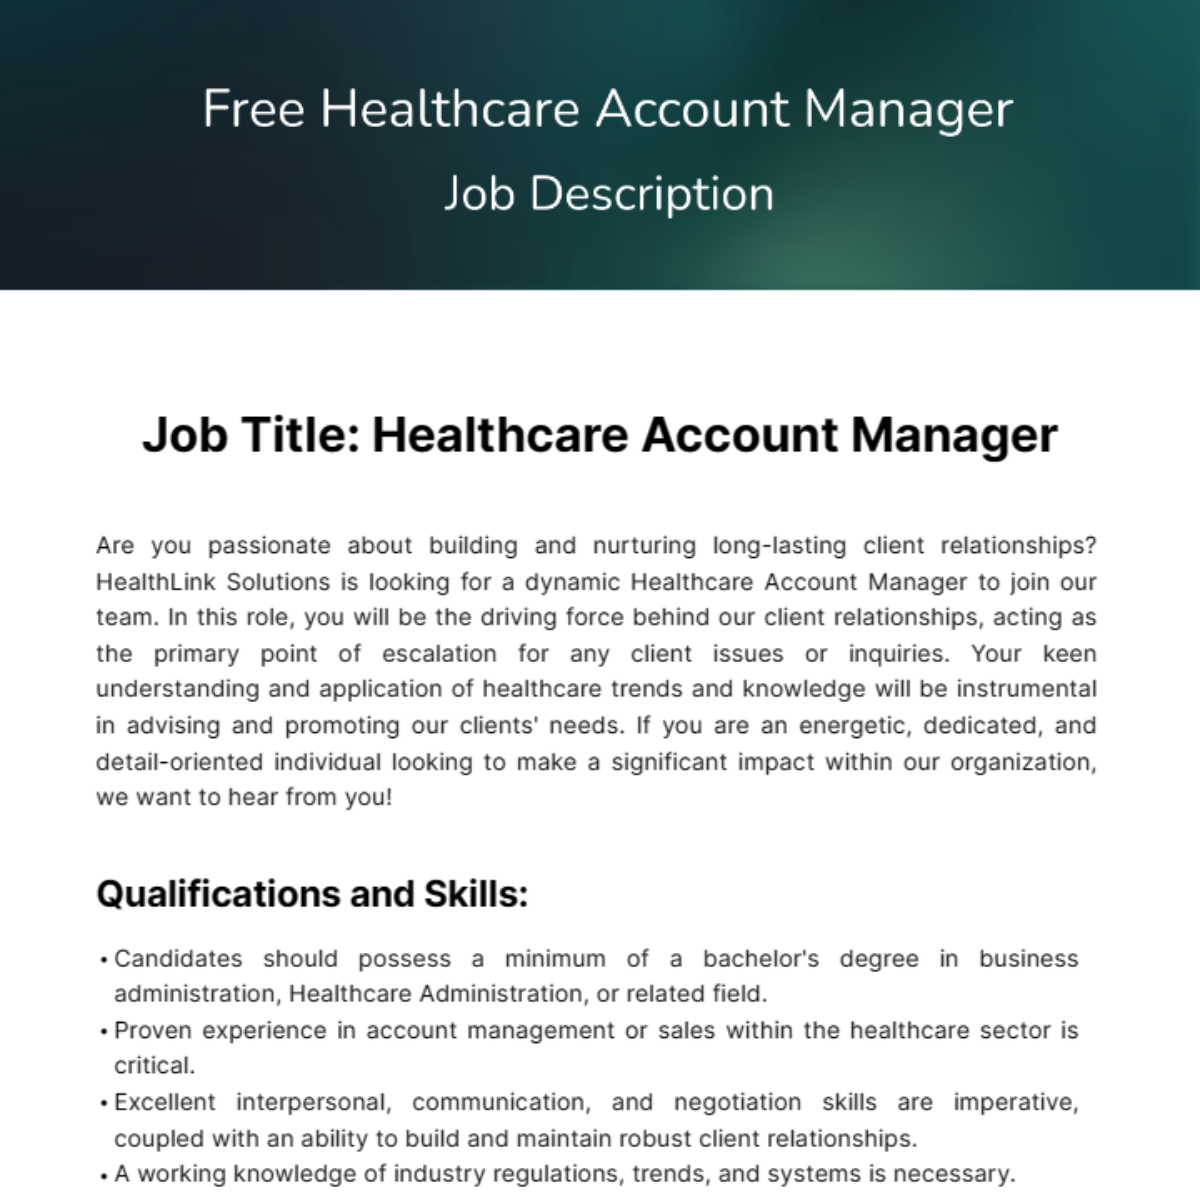 Free Healthcare Account Manager Job Description Template